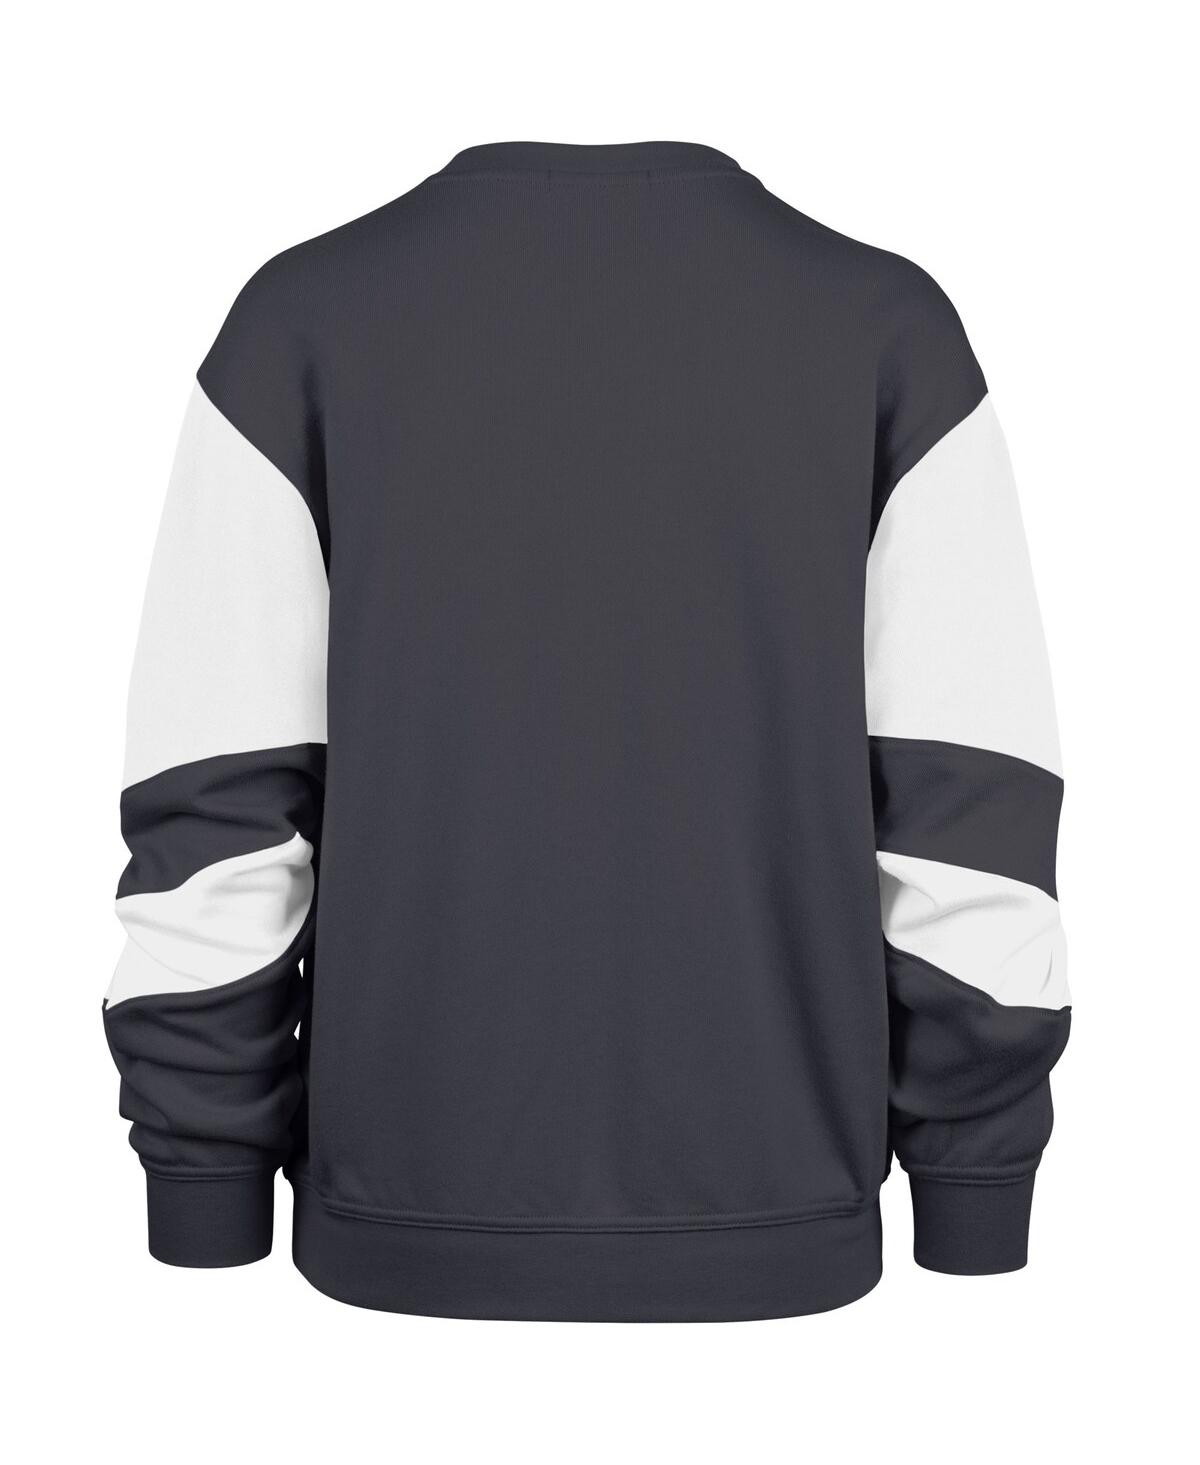 Shop 47 Brand Women's ' Gray La Clippers 2023/24 City Edition Nova Crew Sweatshirt